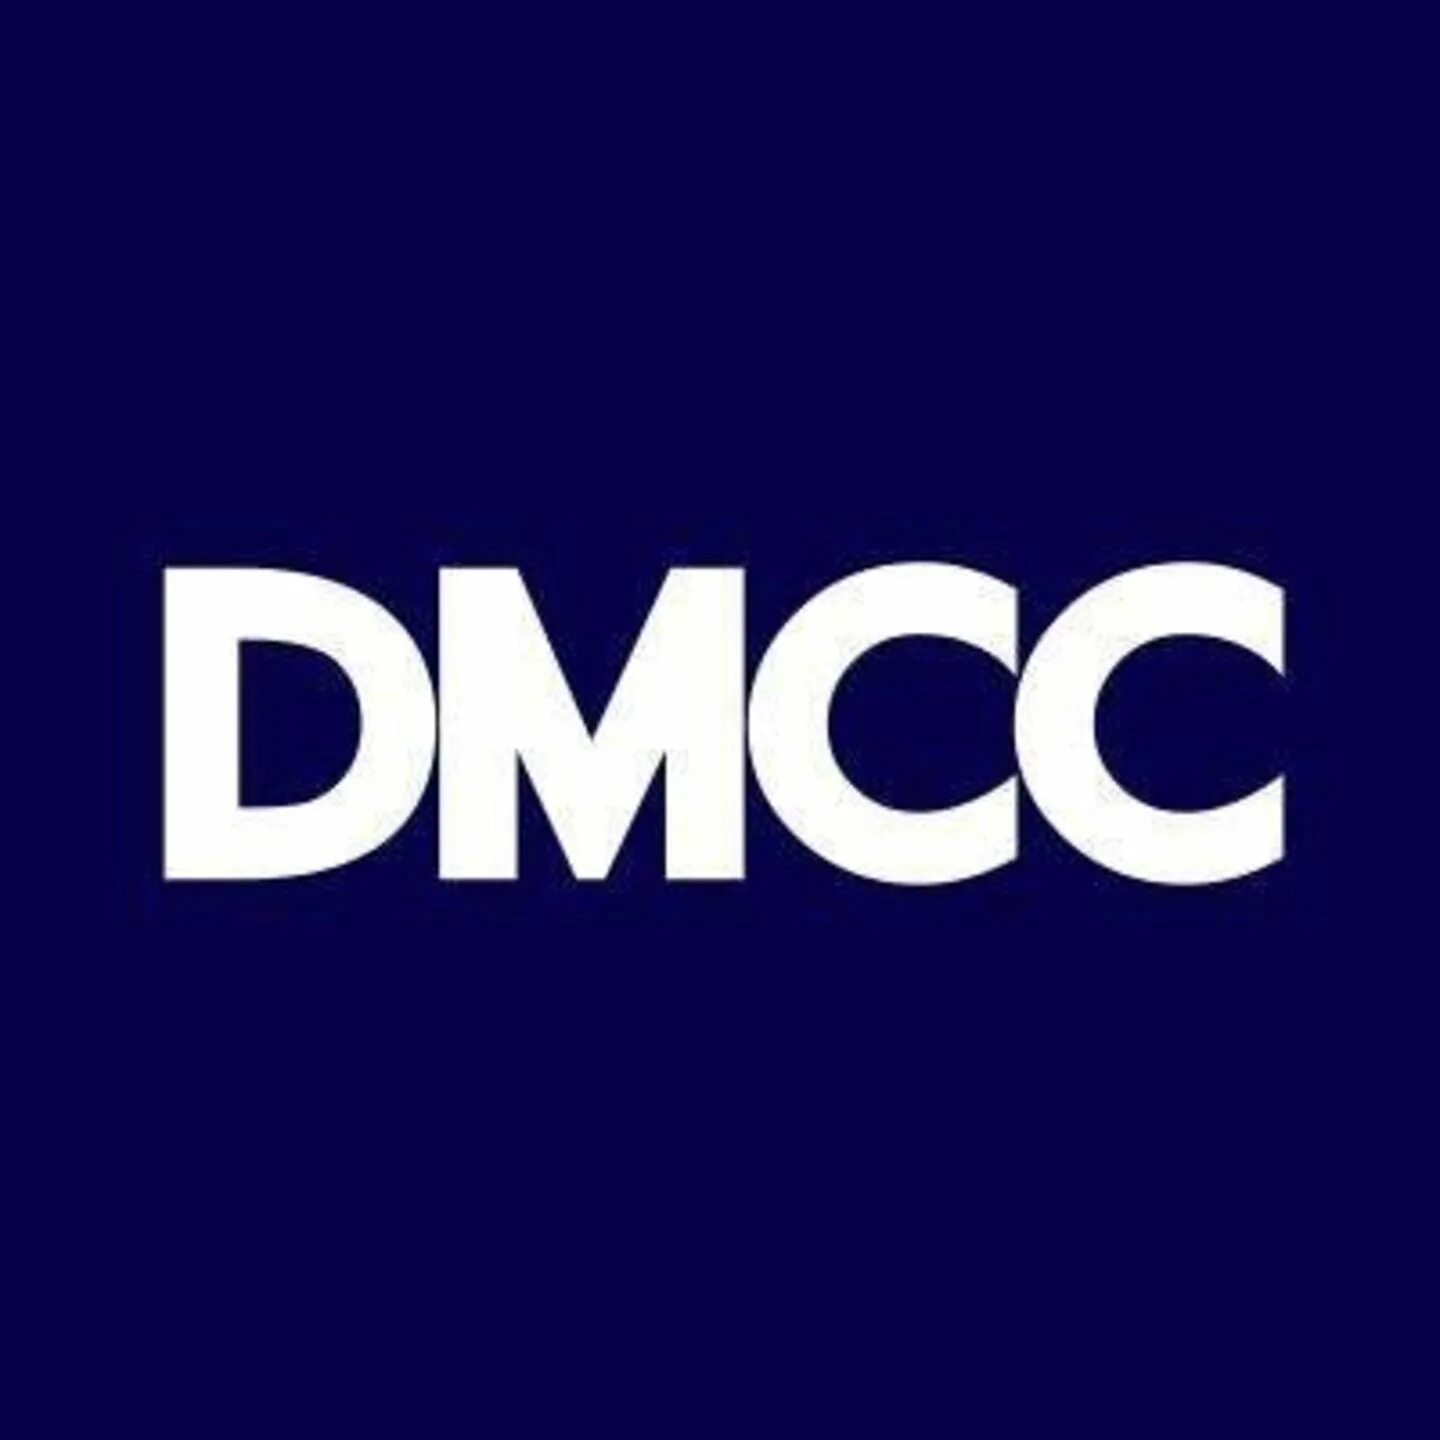 Wl company dmcc reviews. DMCC. Фризона DMCC это. DMCC Dubai. Dubai Multi Commodities Centre (DMCC).